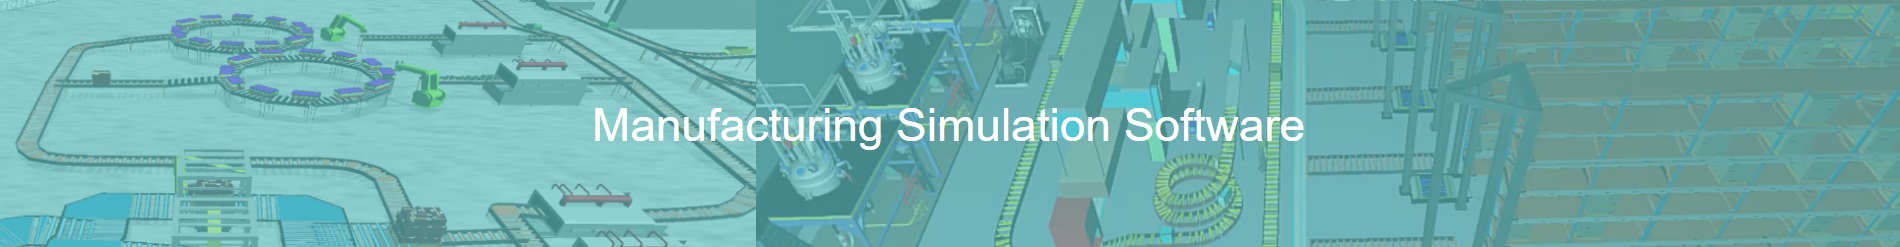 manufacturing simulation - manufacturing simulation software